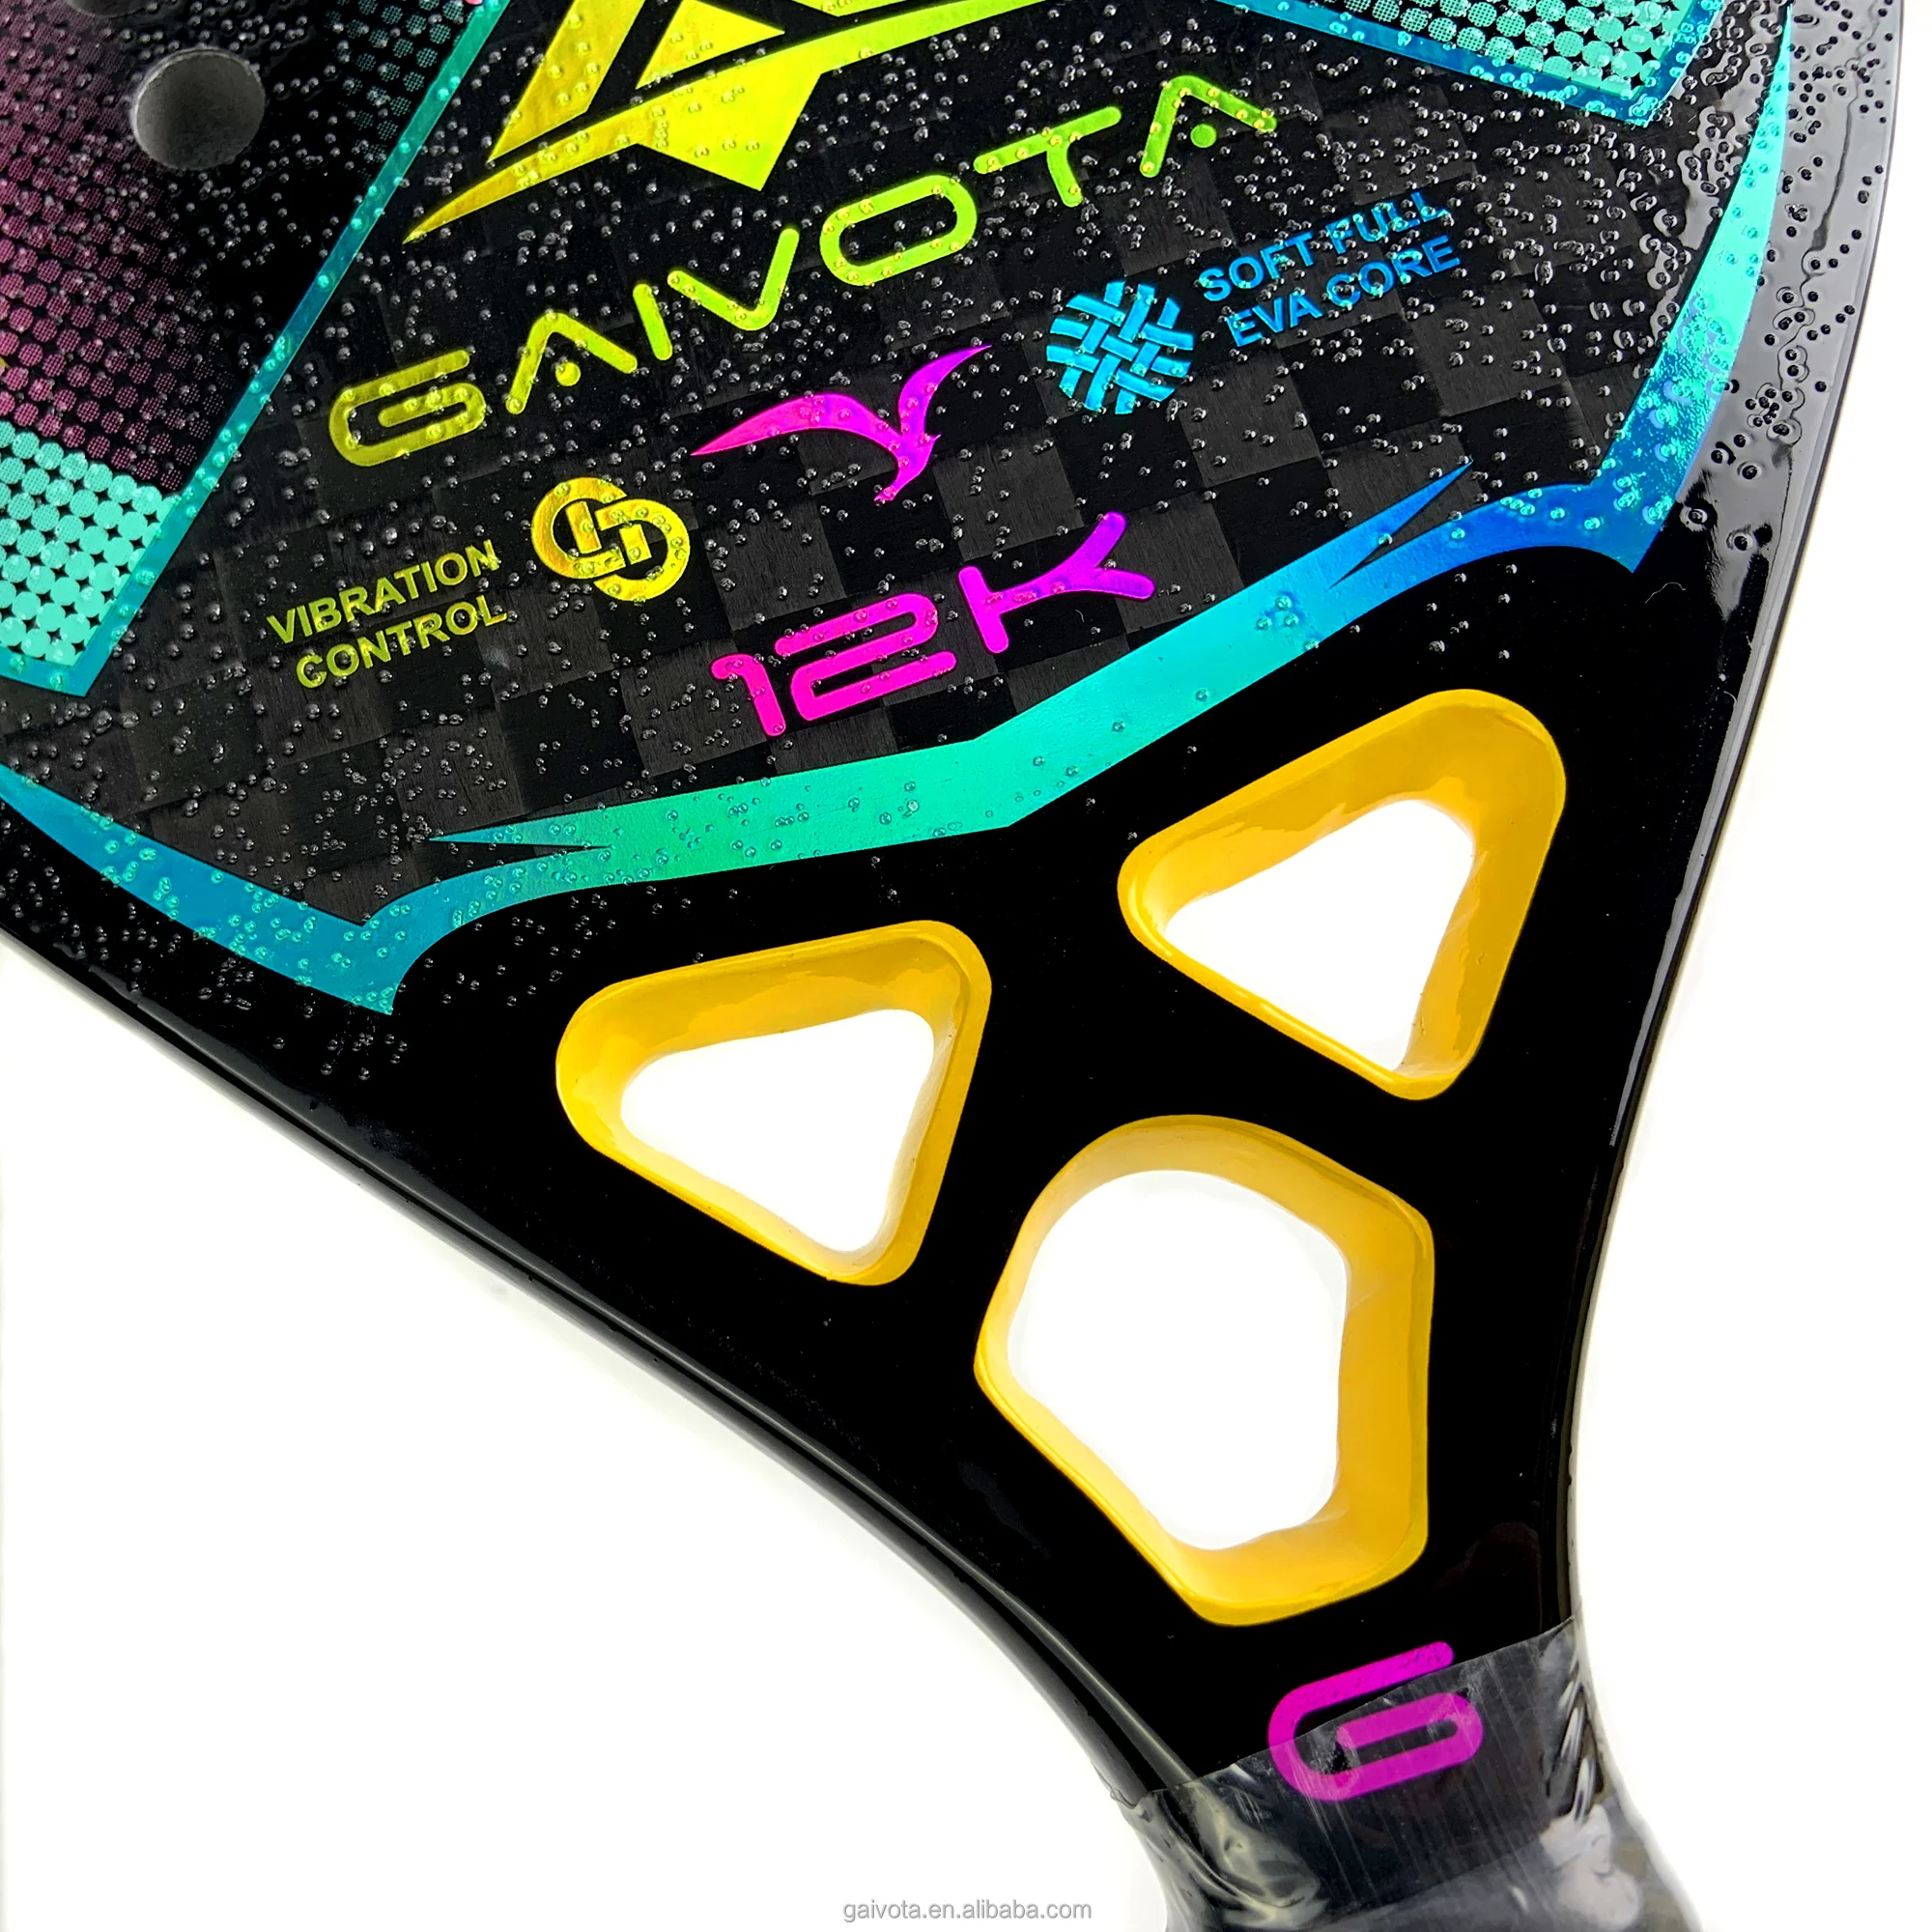 Customized Brazilian hot selling beach tennis racket carbon 12k Gaivota Racket  beach tennis racket carbon